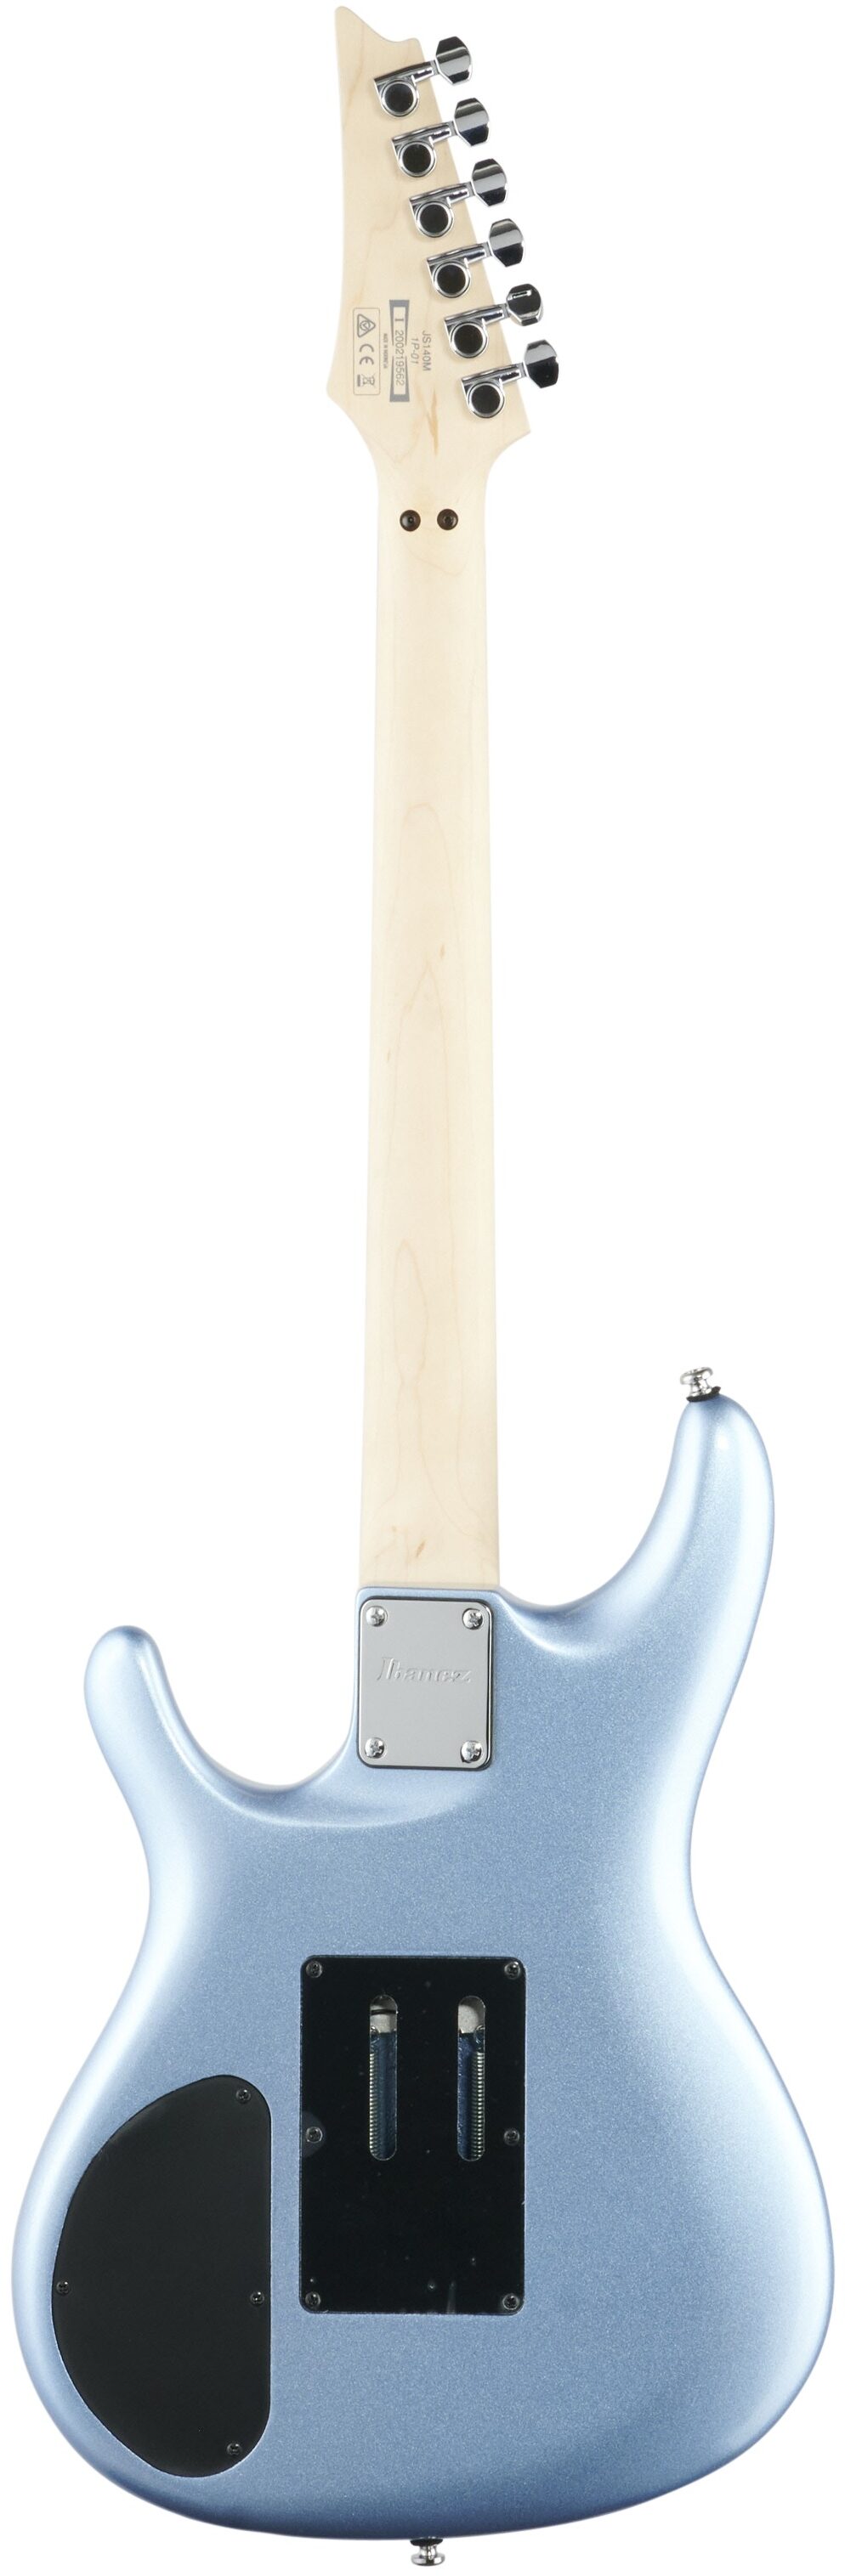 Ibanez Joe Satriani JS140M Electric Guitar | zZounds